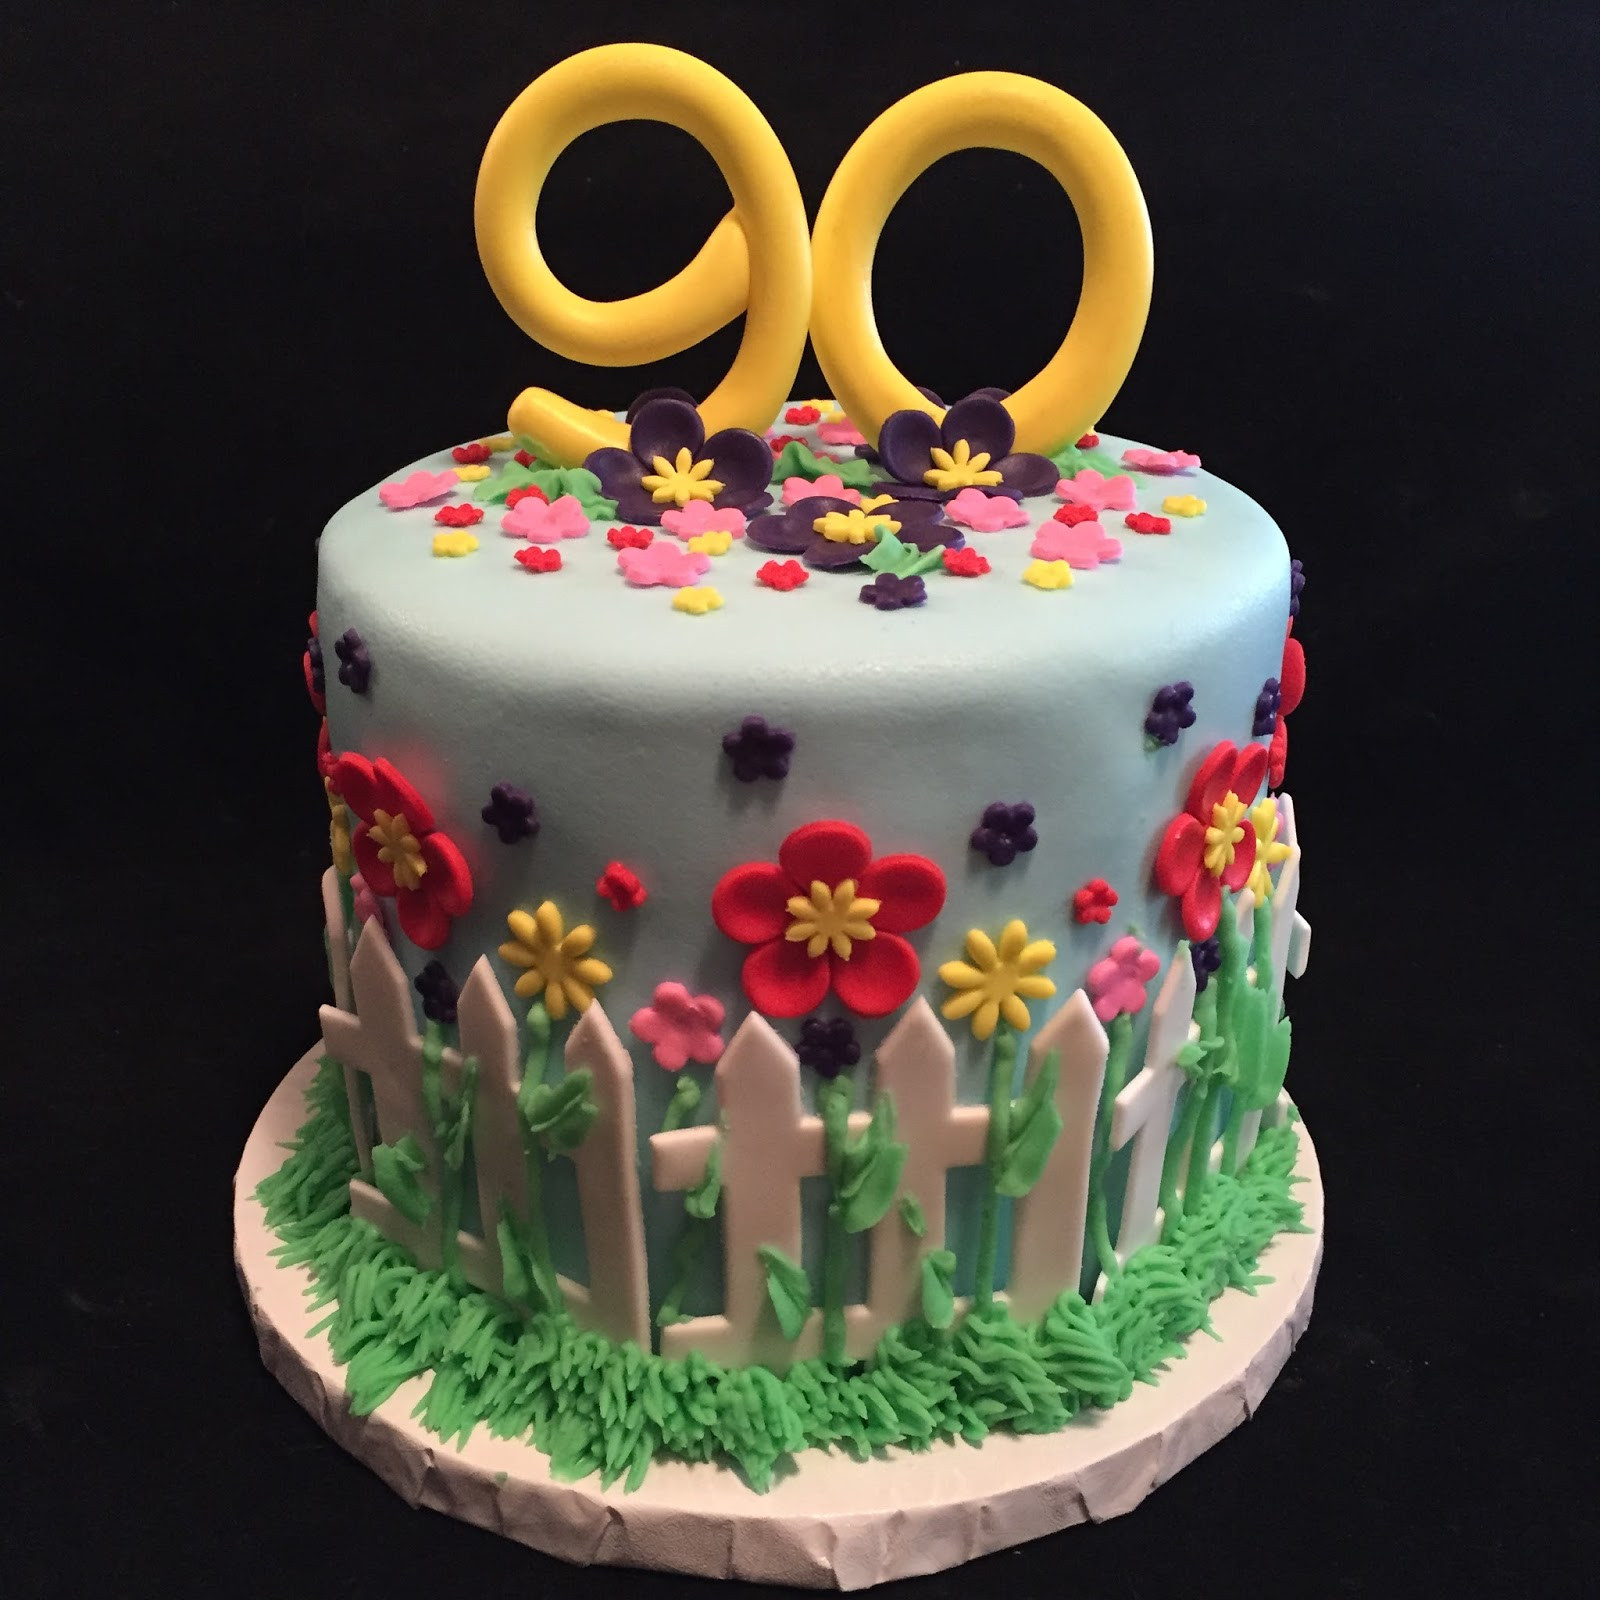 Best ideas about Birthday Cake For Grandma
. Save or Pin Grandma Joyce s 90th Birthday Now.